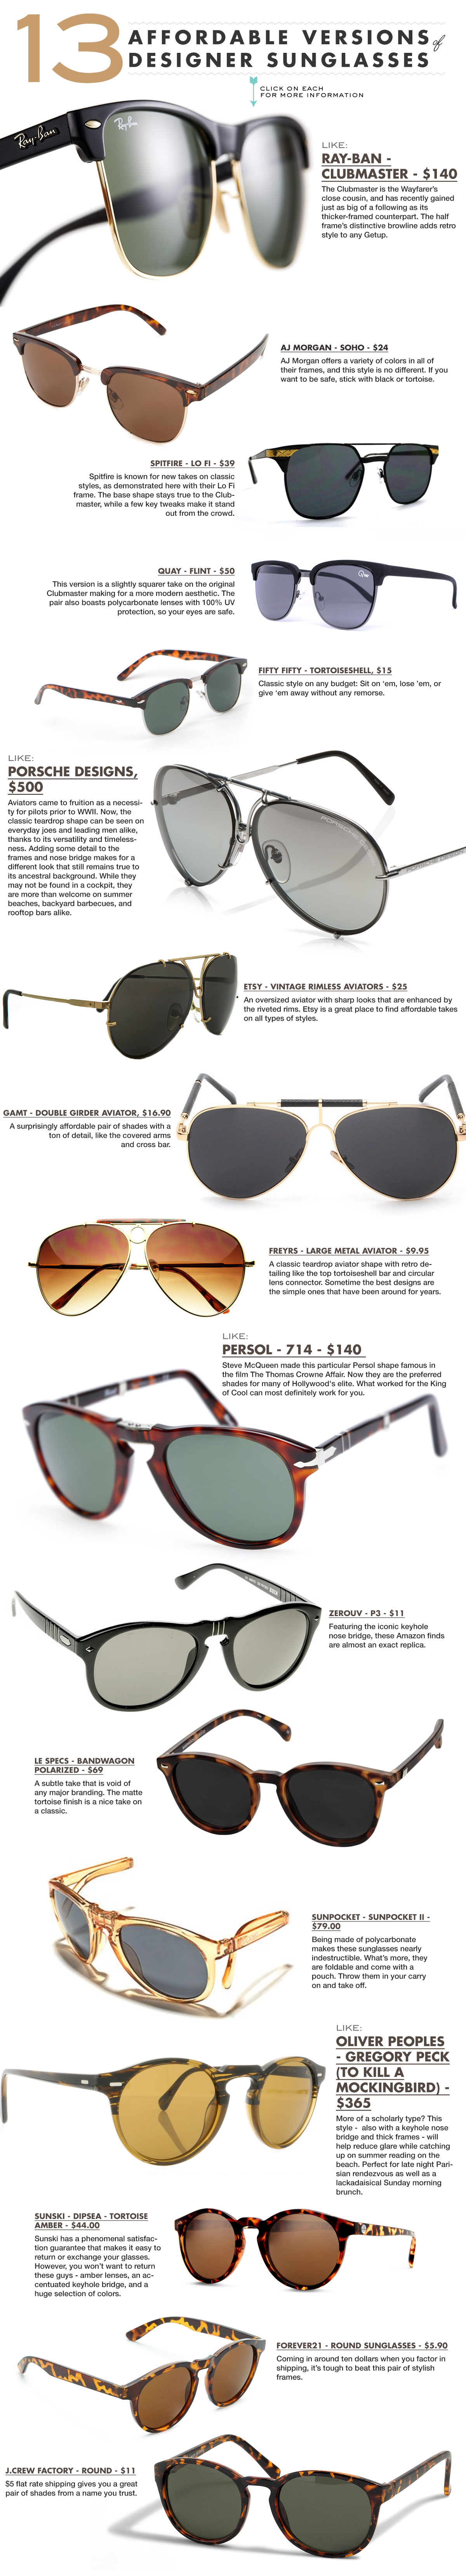 affordable versions of designer sunglasses